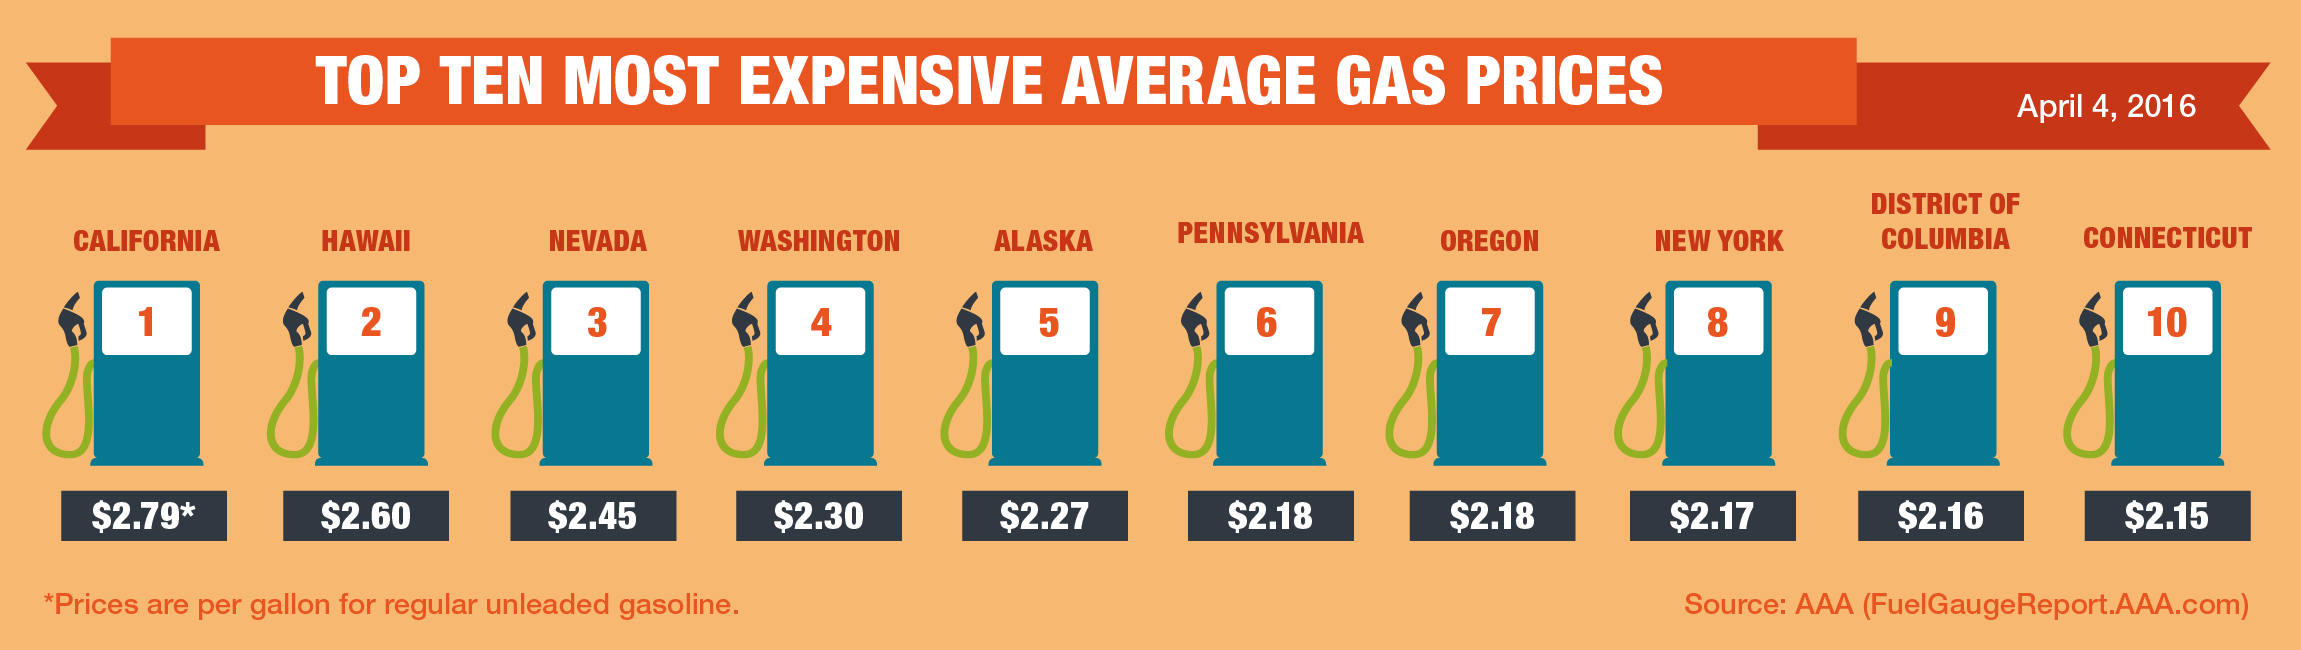 Top10-Highest-Average-Gas-Prices-4-4-16